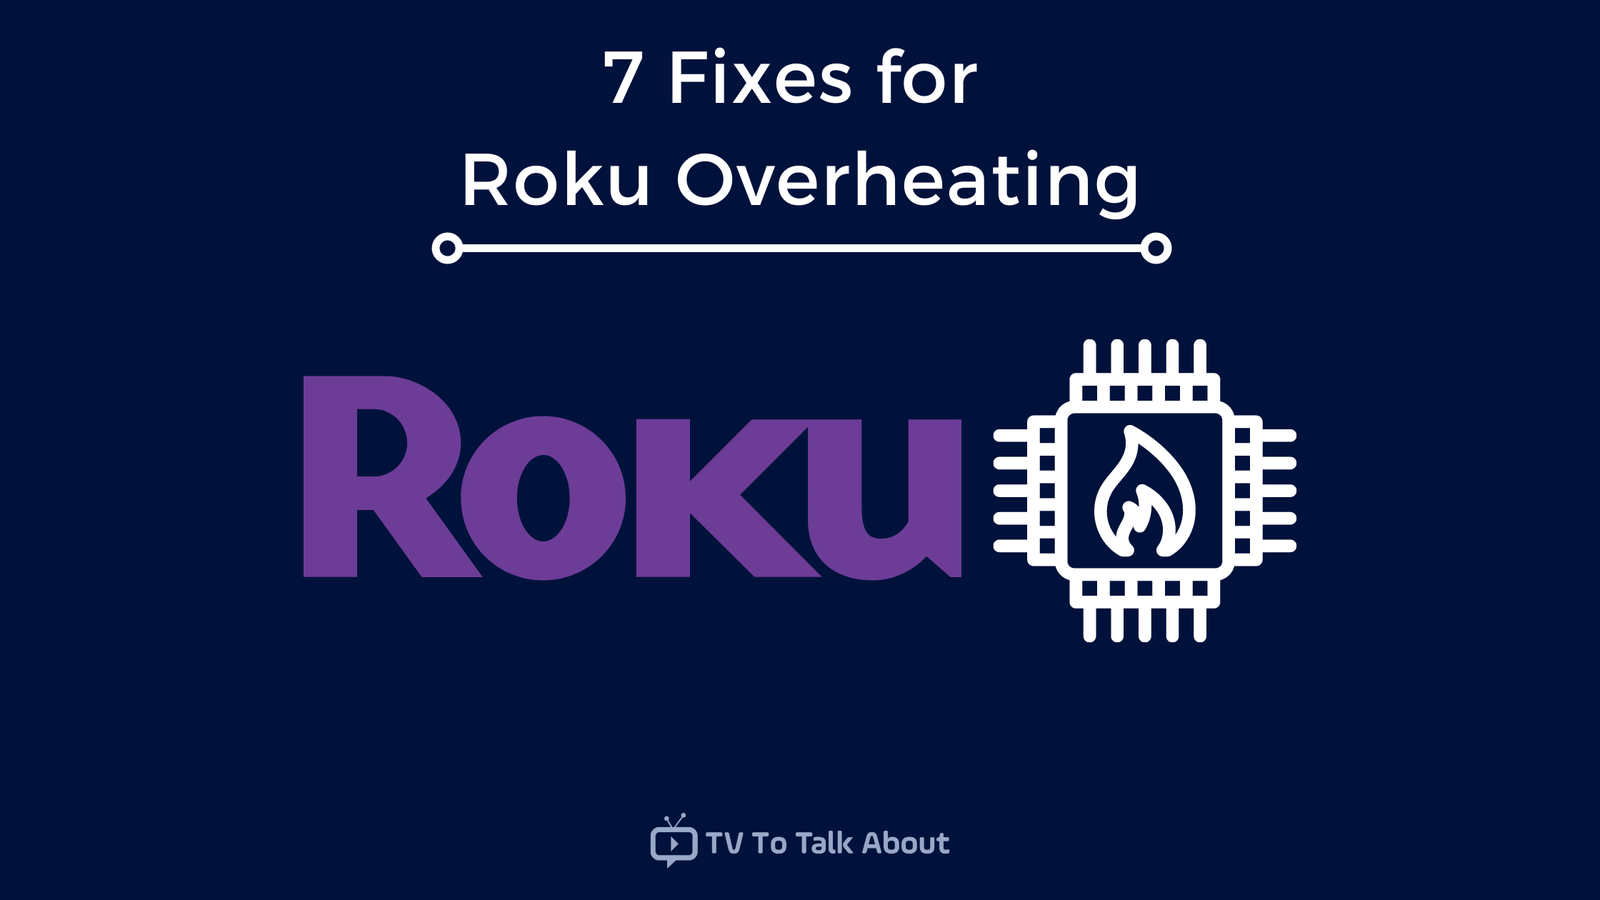 How to fix Roku Overheating